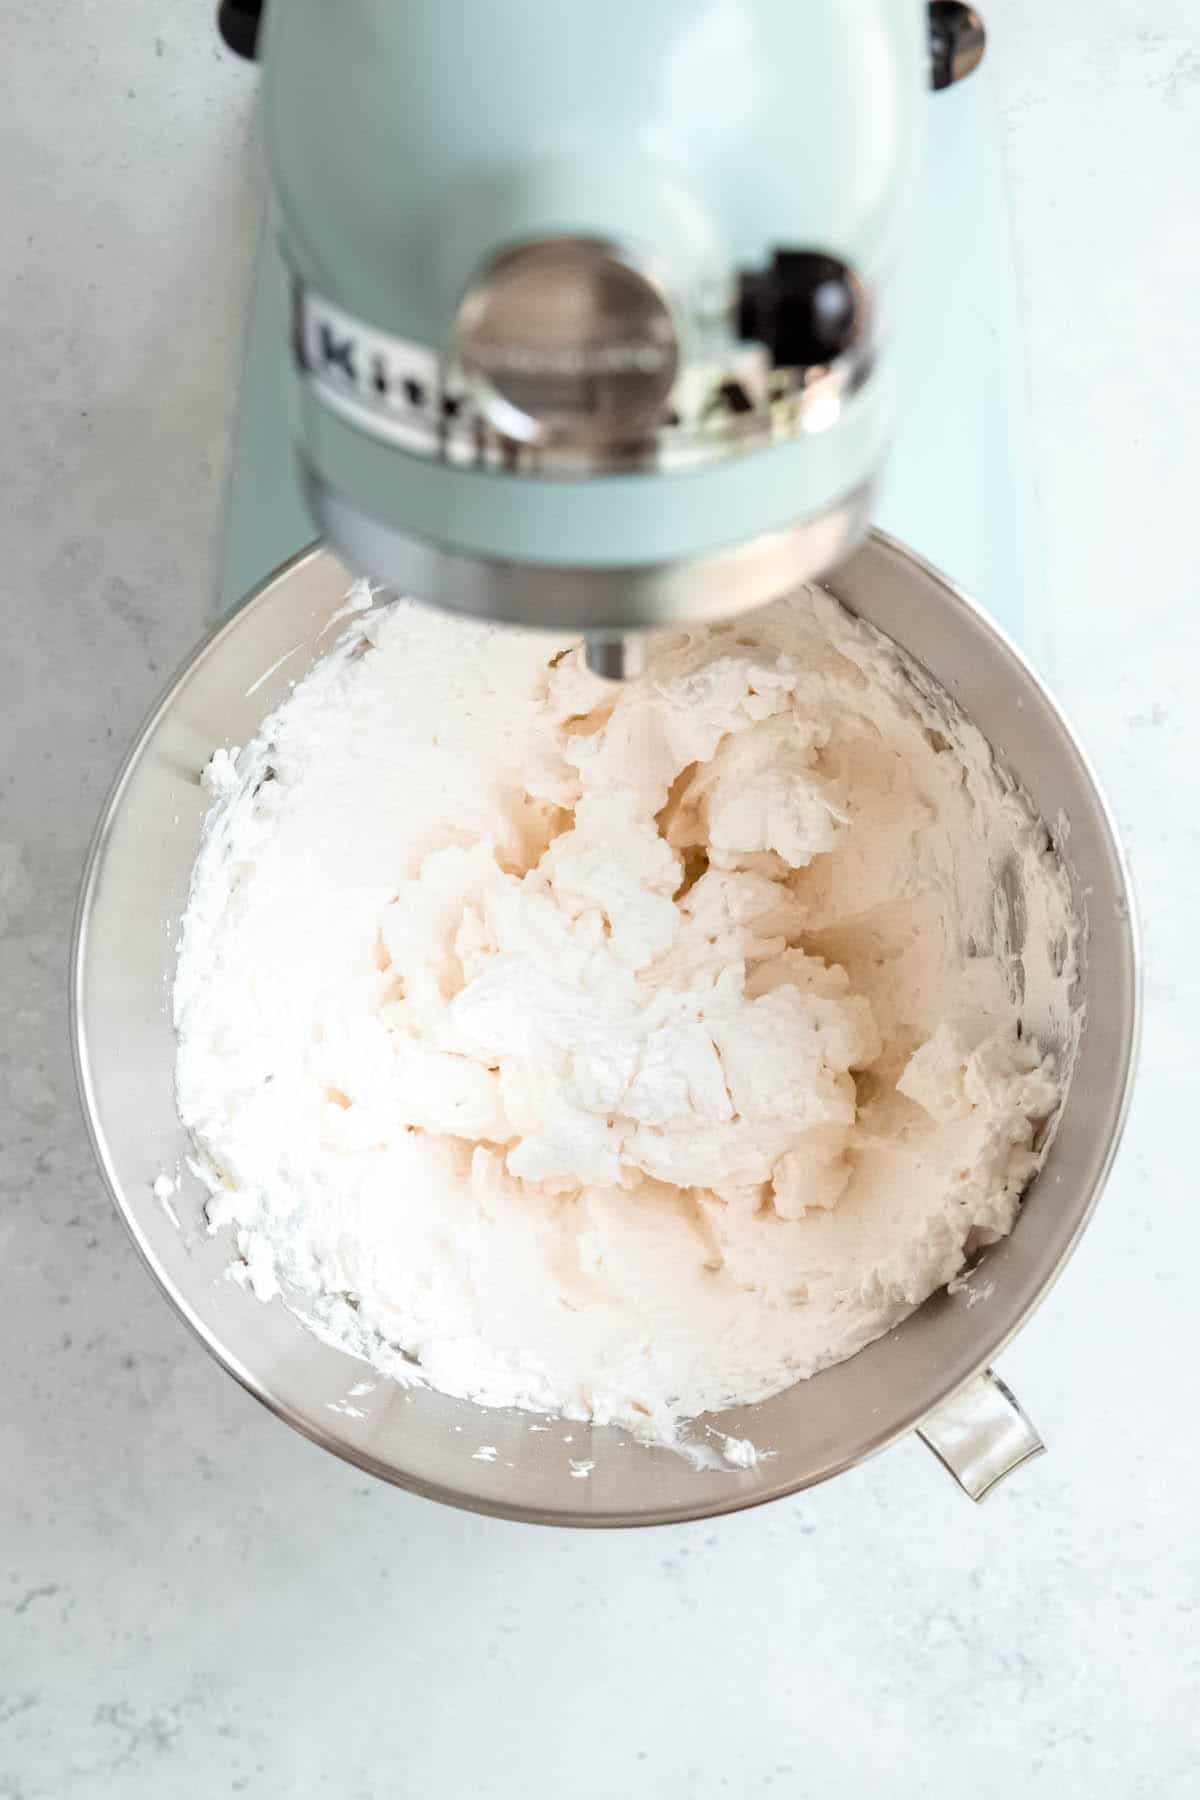 cream whipped to stiff peaks in a kitchenaid mixer.